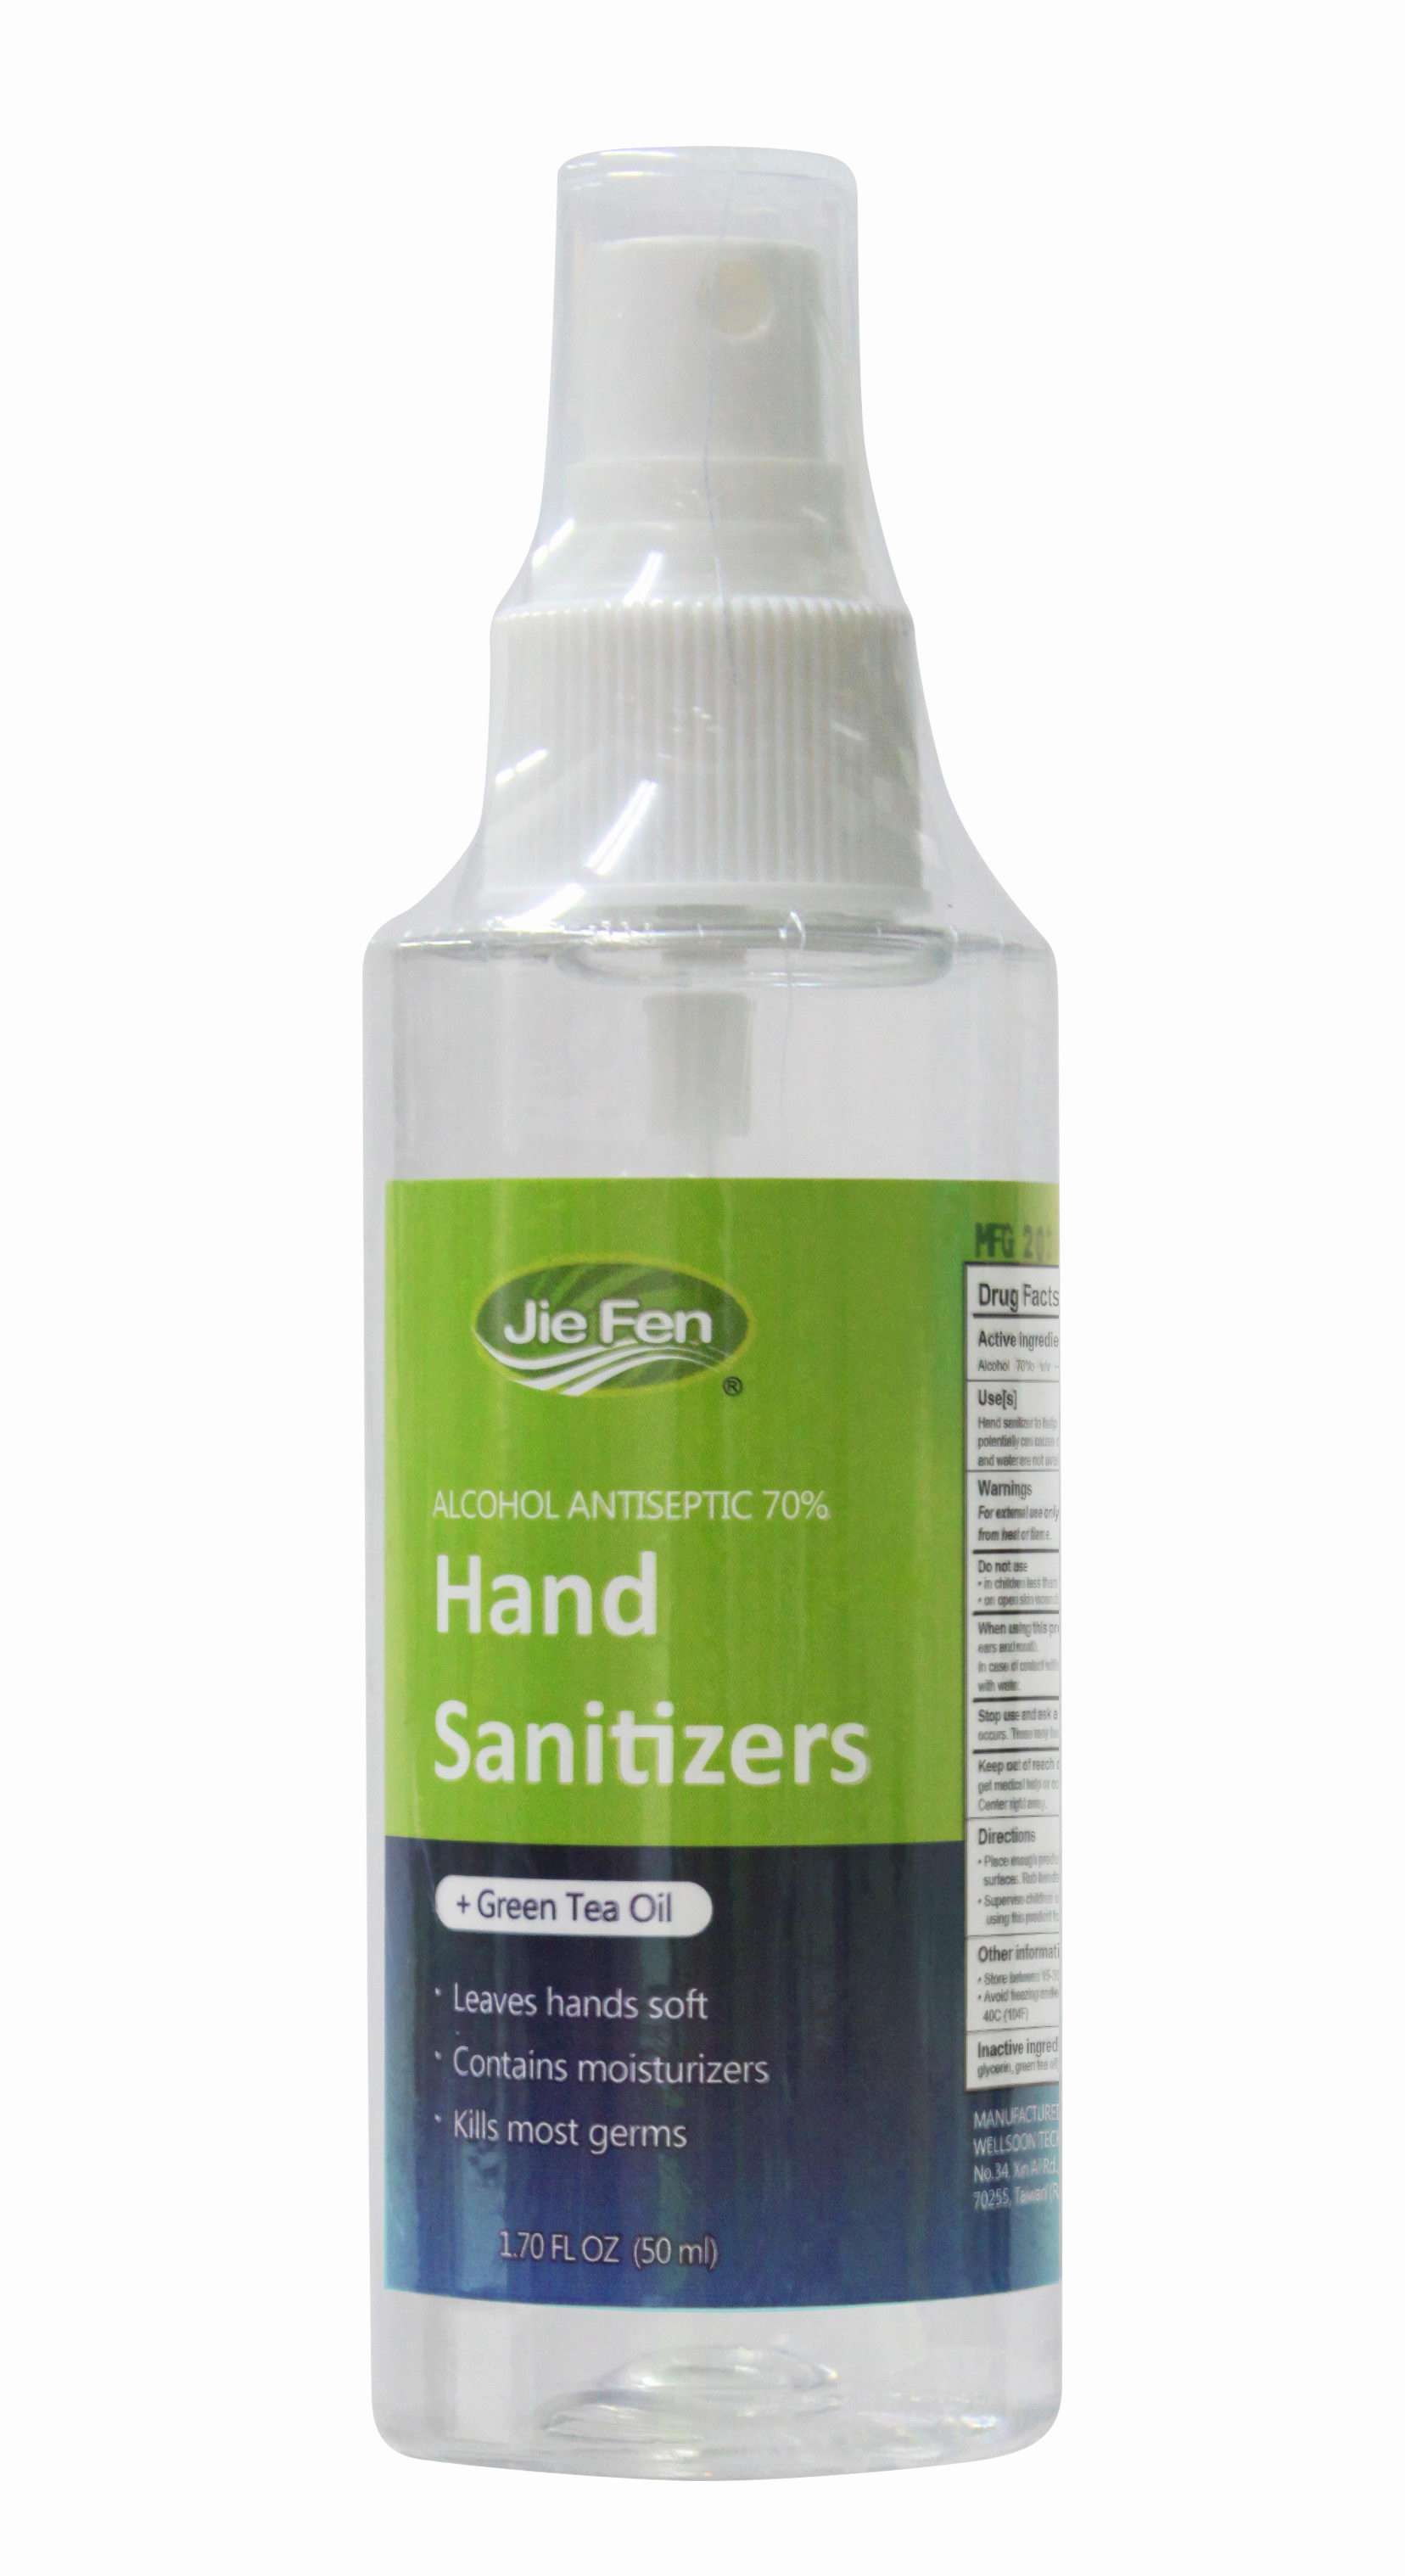 50ml hand sanitizers spray